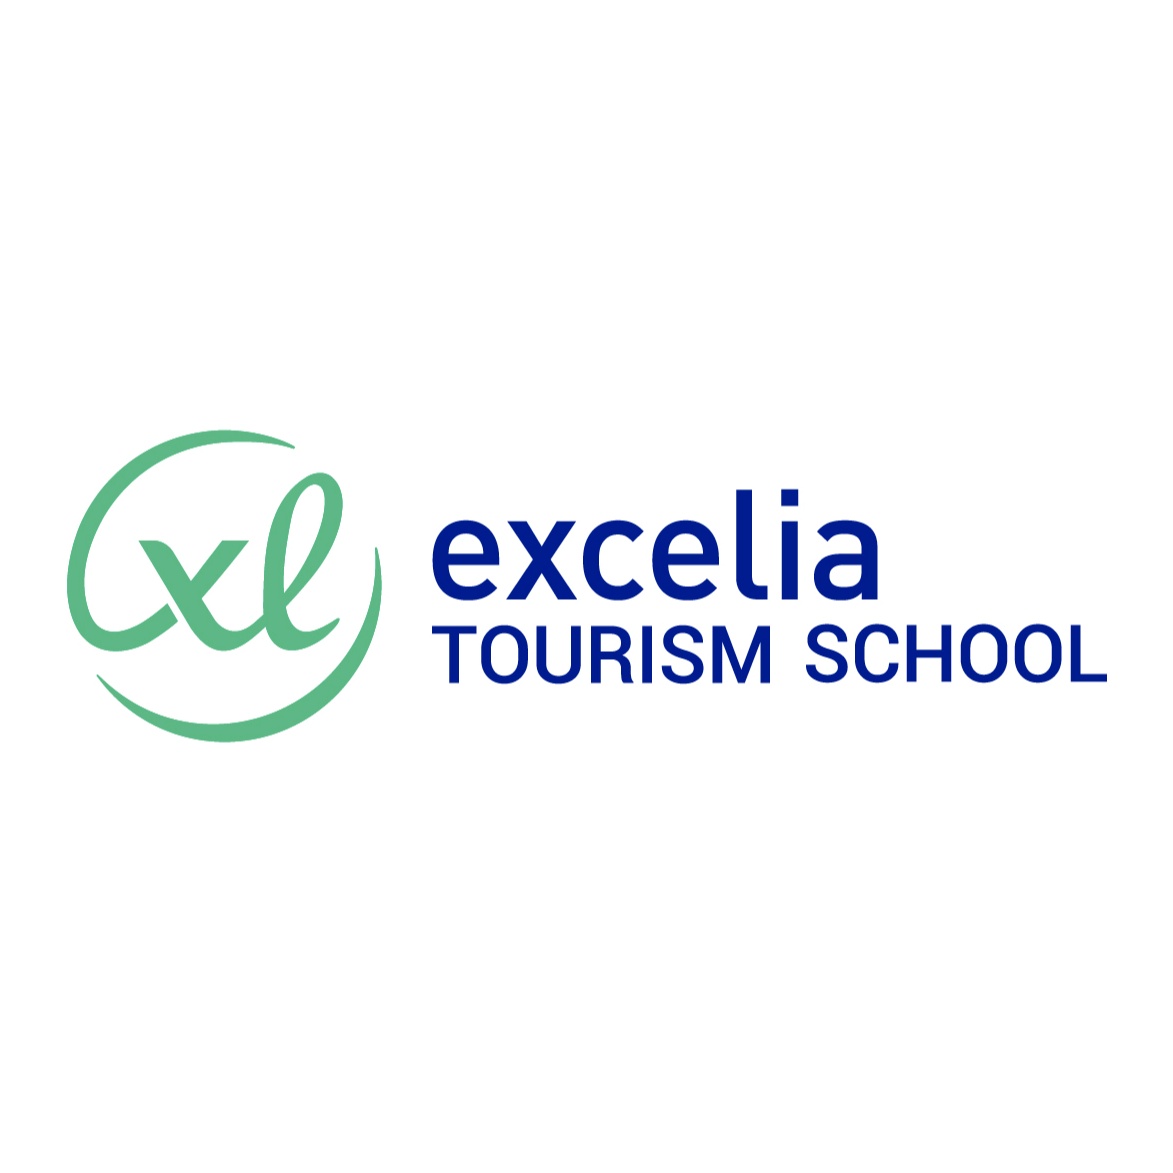 Excelia Tourism School